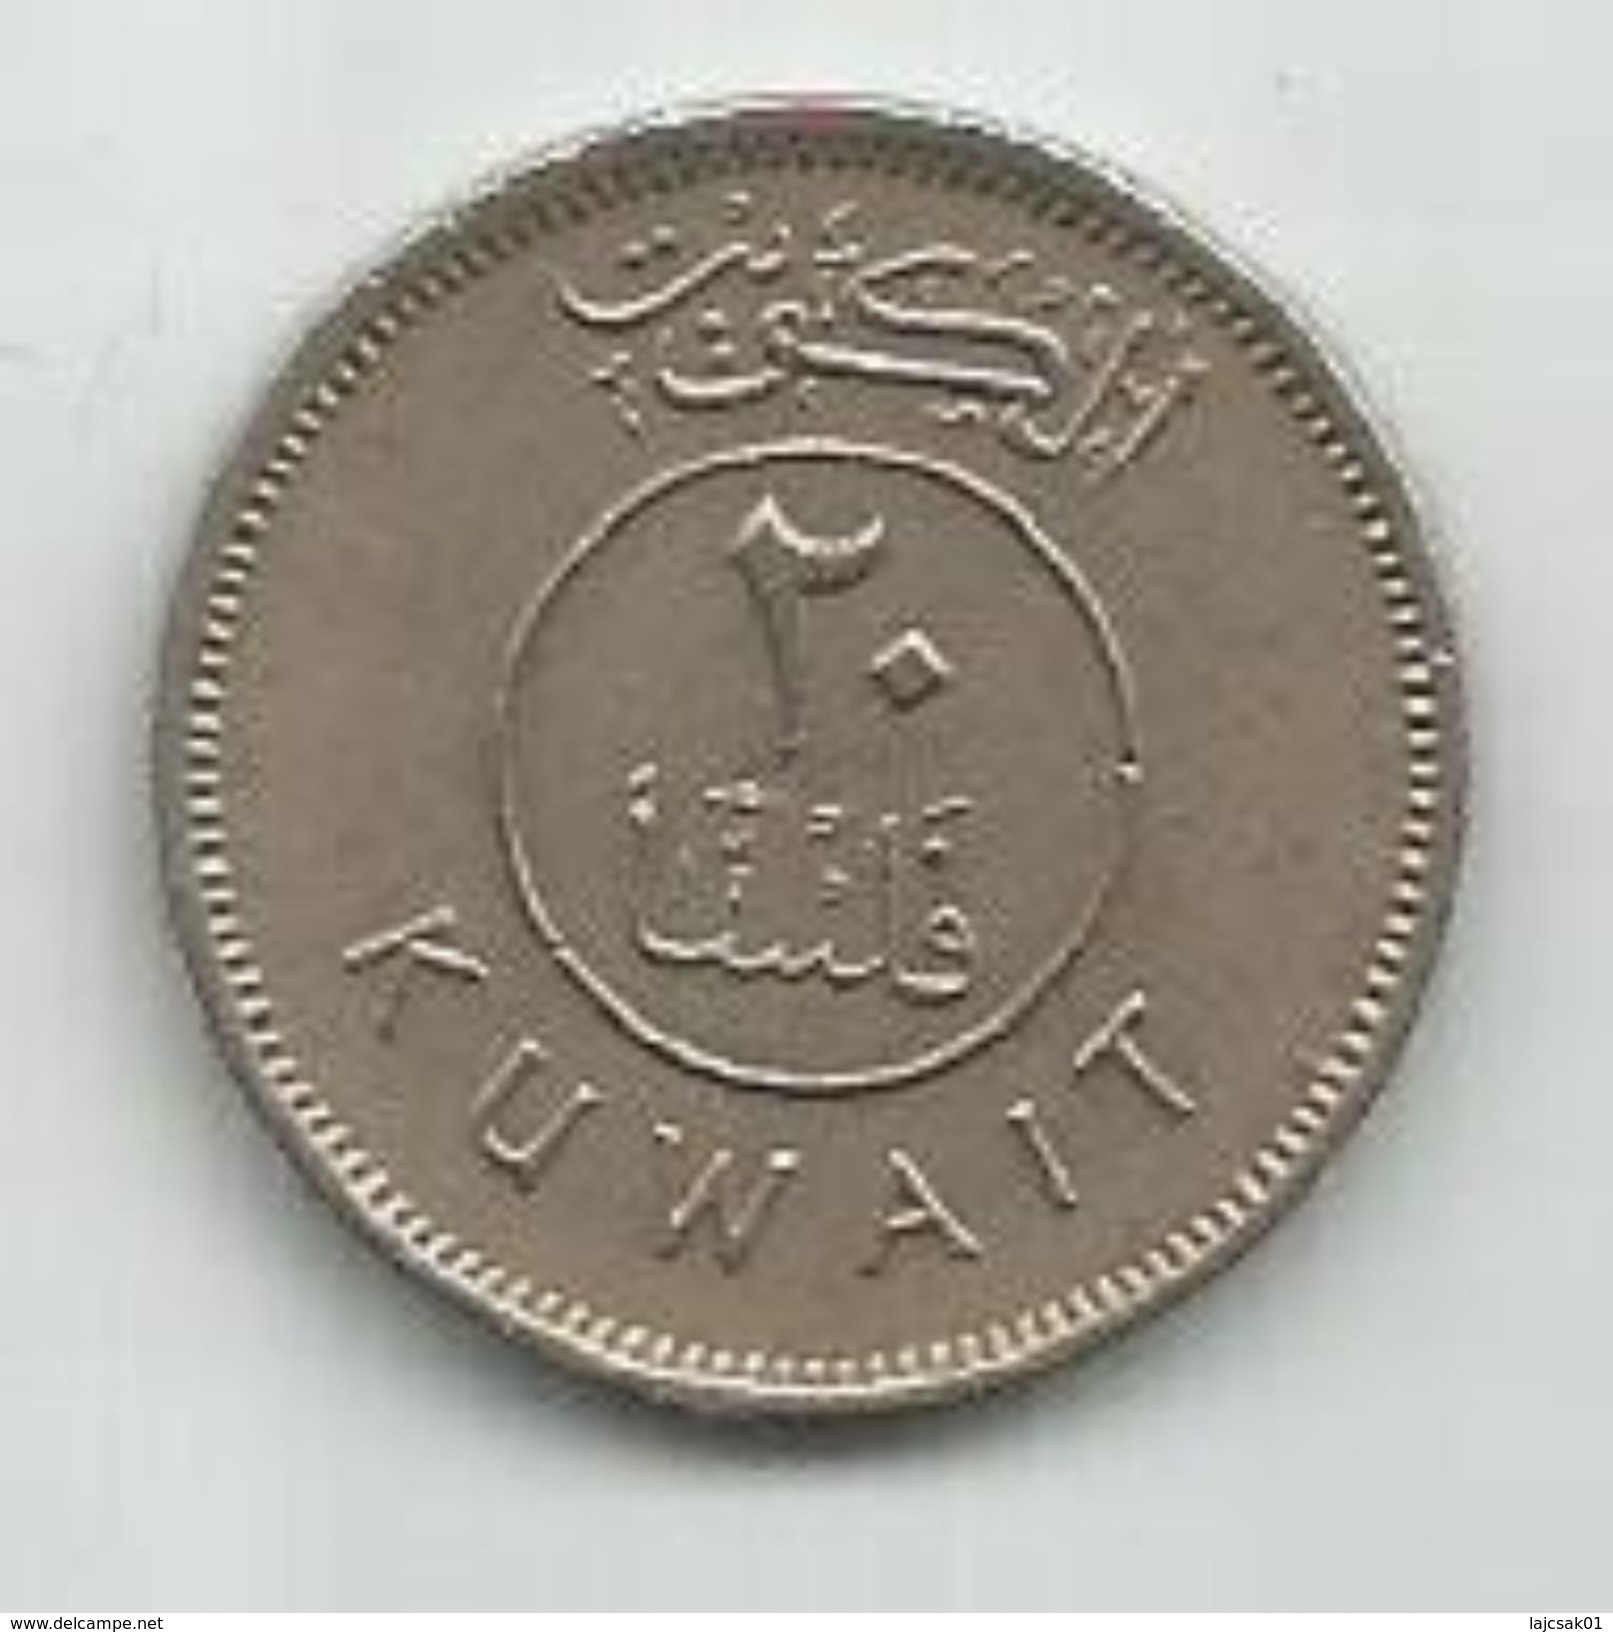 Kuwait 20 Fils 1976. - Kuwait